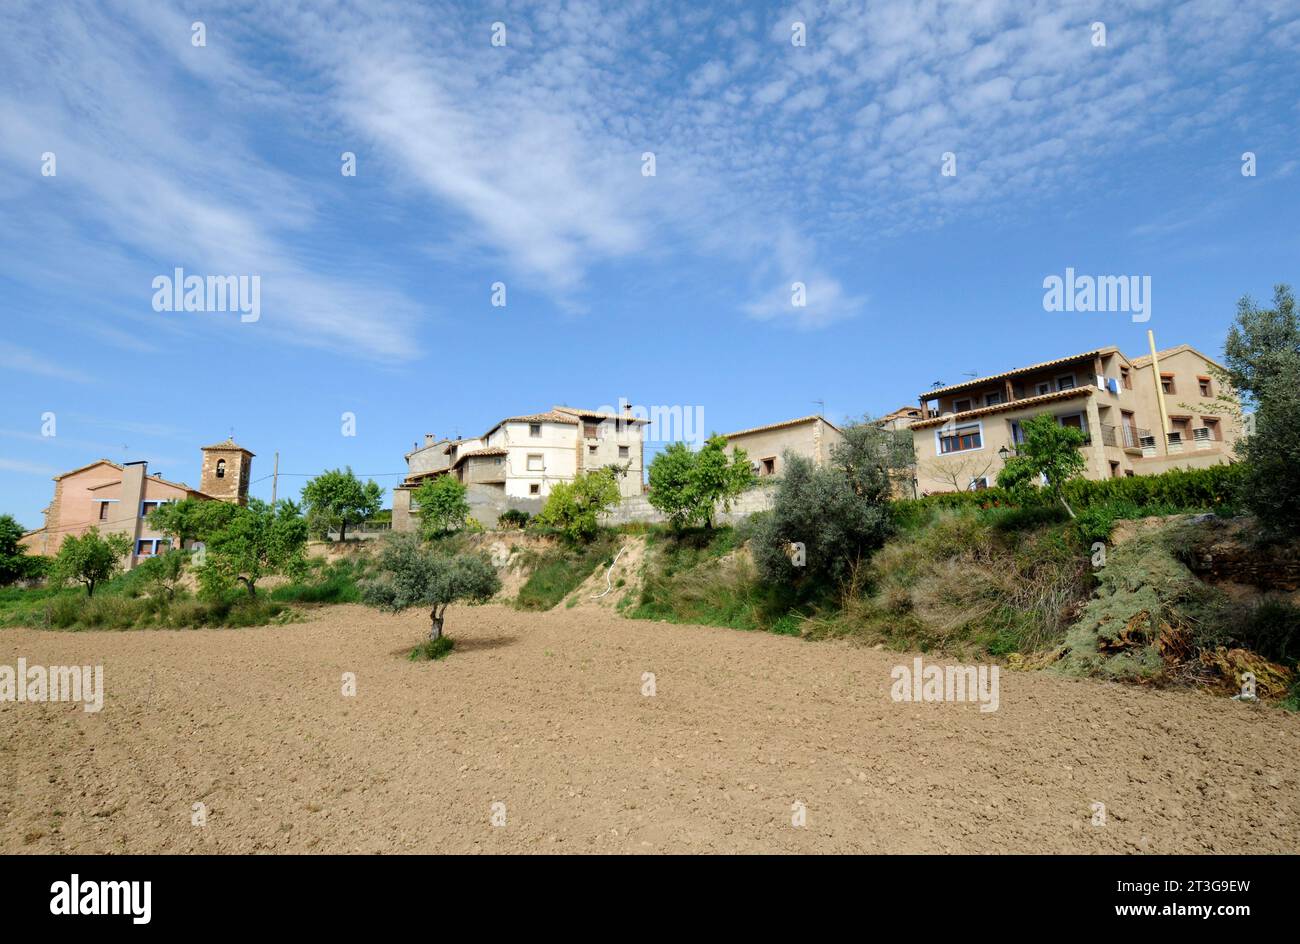 Asque, Colungo municipality. Sierra y Cañones de Guara Natural Park, Huesca province, Aragon, Spain. Stock Photo